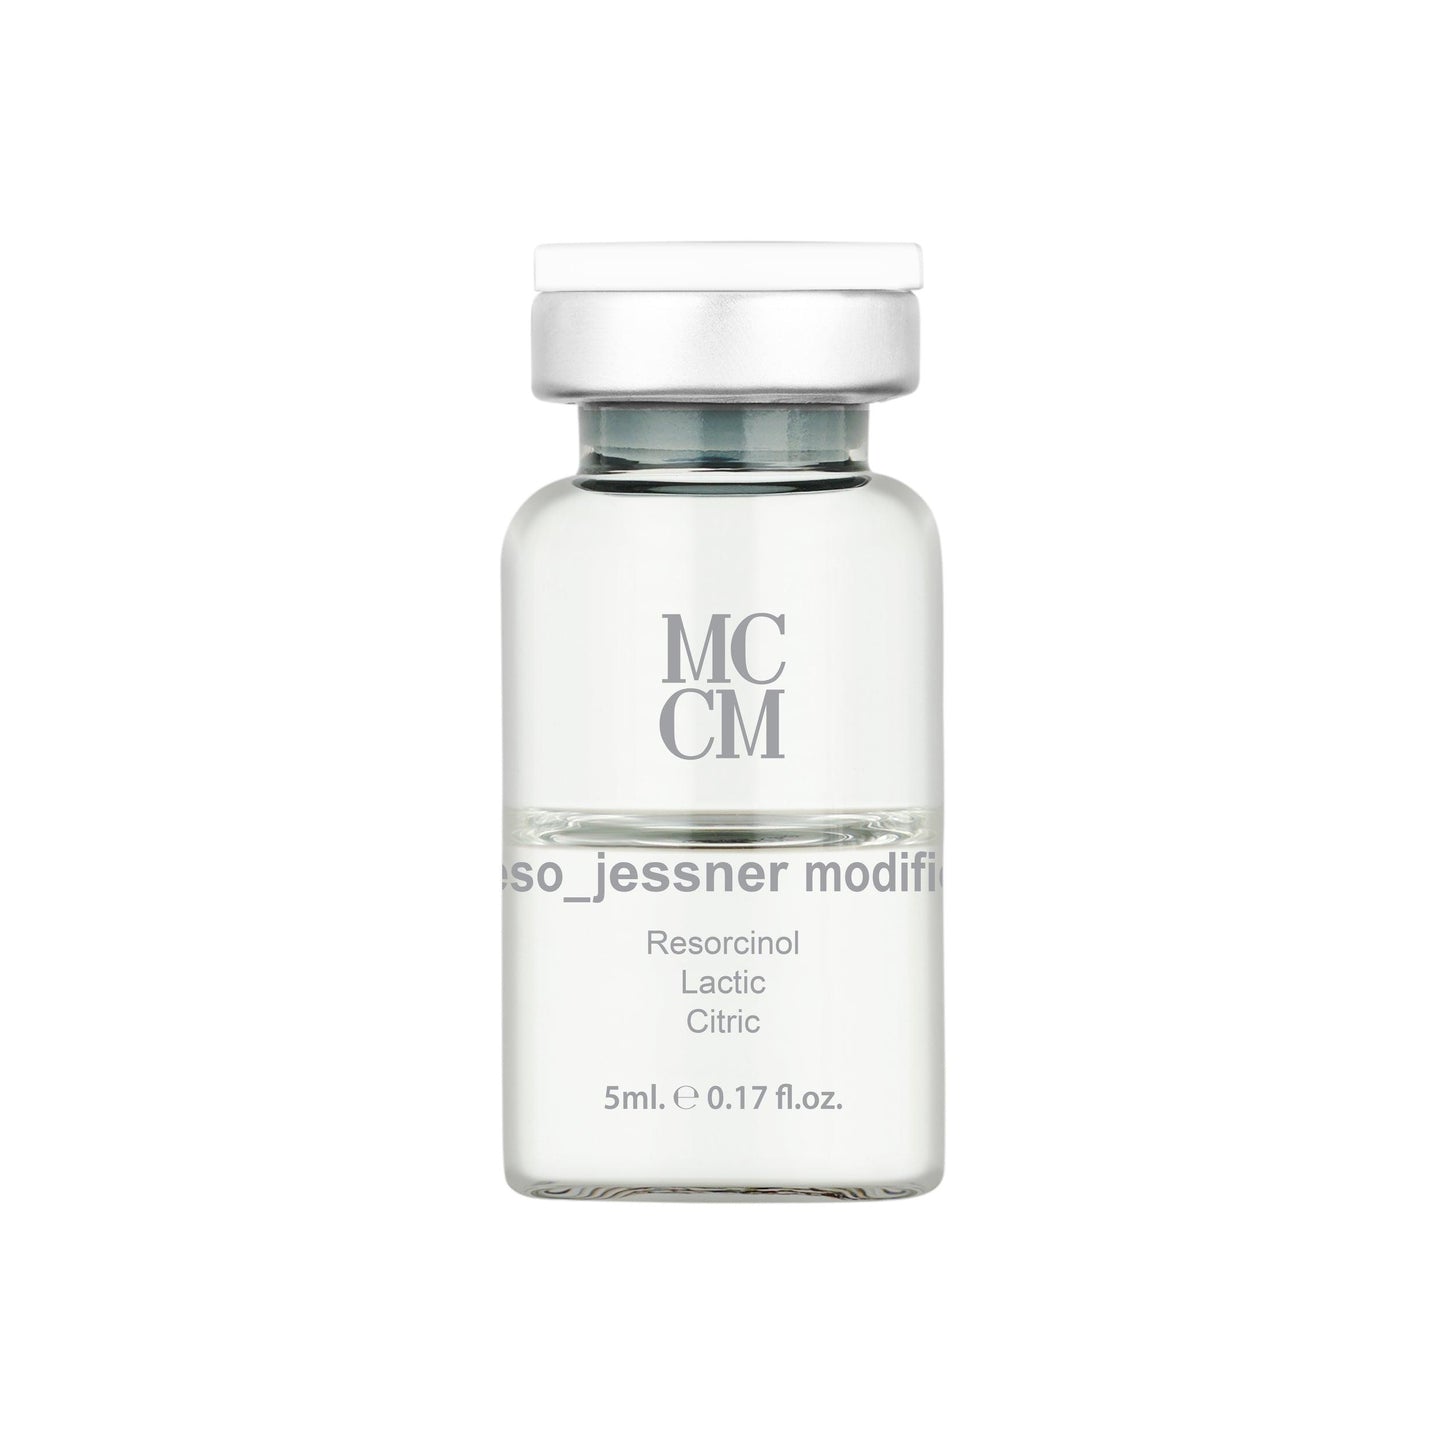 Meso_jessner modified - MCCM Medical Cosmetics